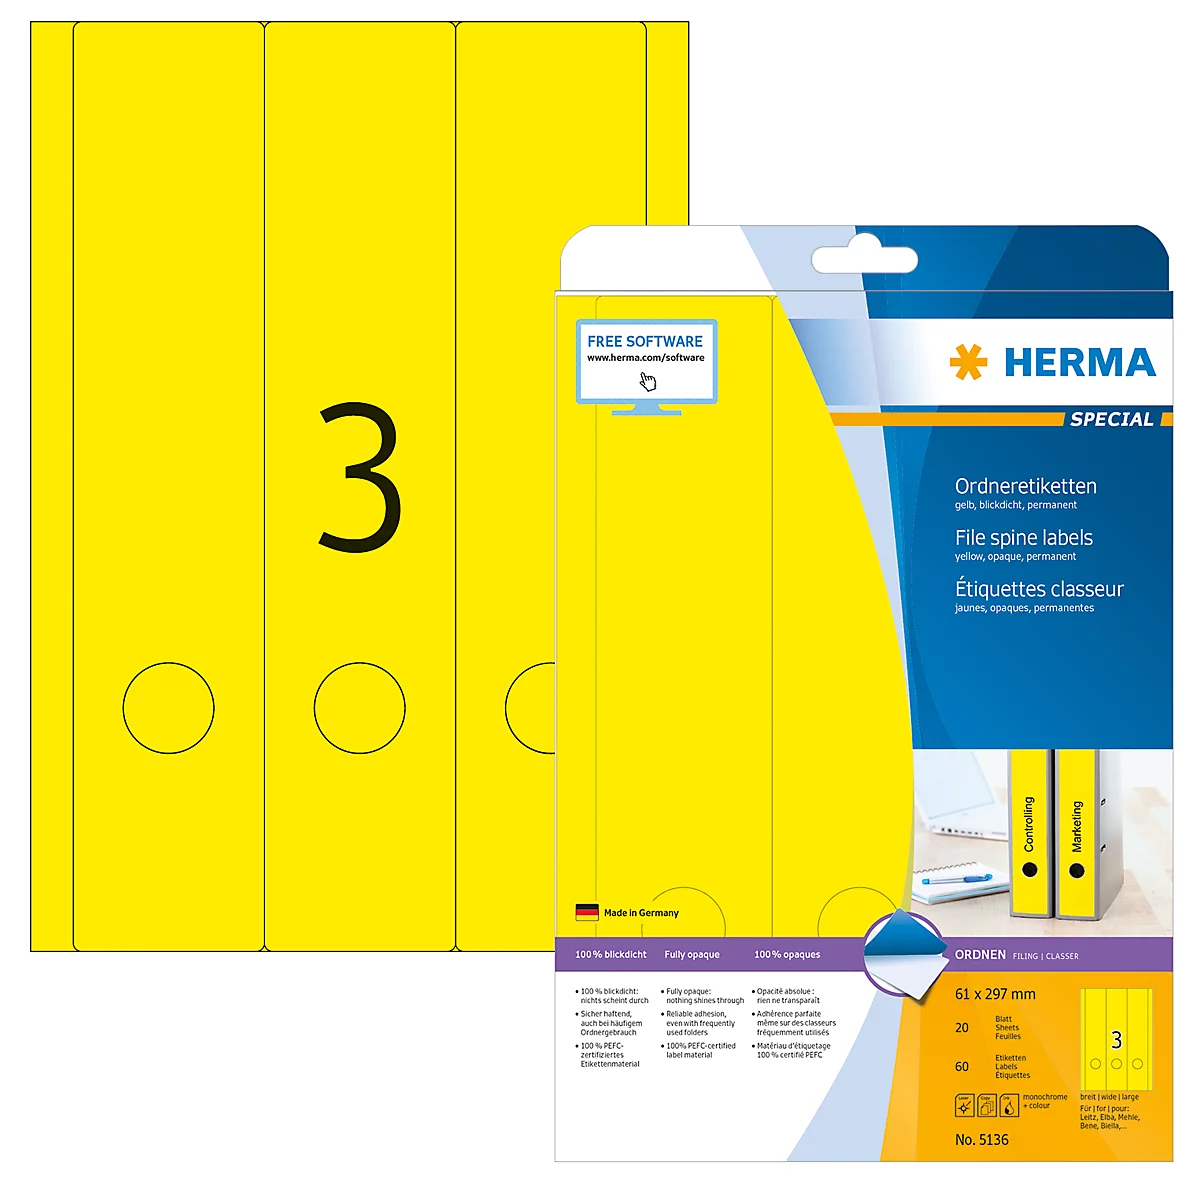 Herma Ordneretiketten A4, 297 x 61 mm, permanent haftend/bedruckbar, 60 Stück, gelb